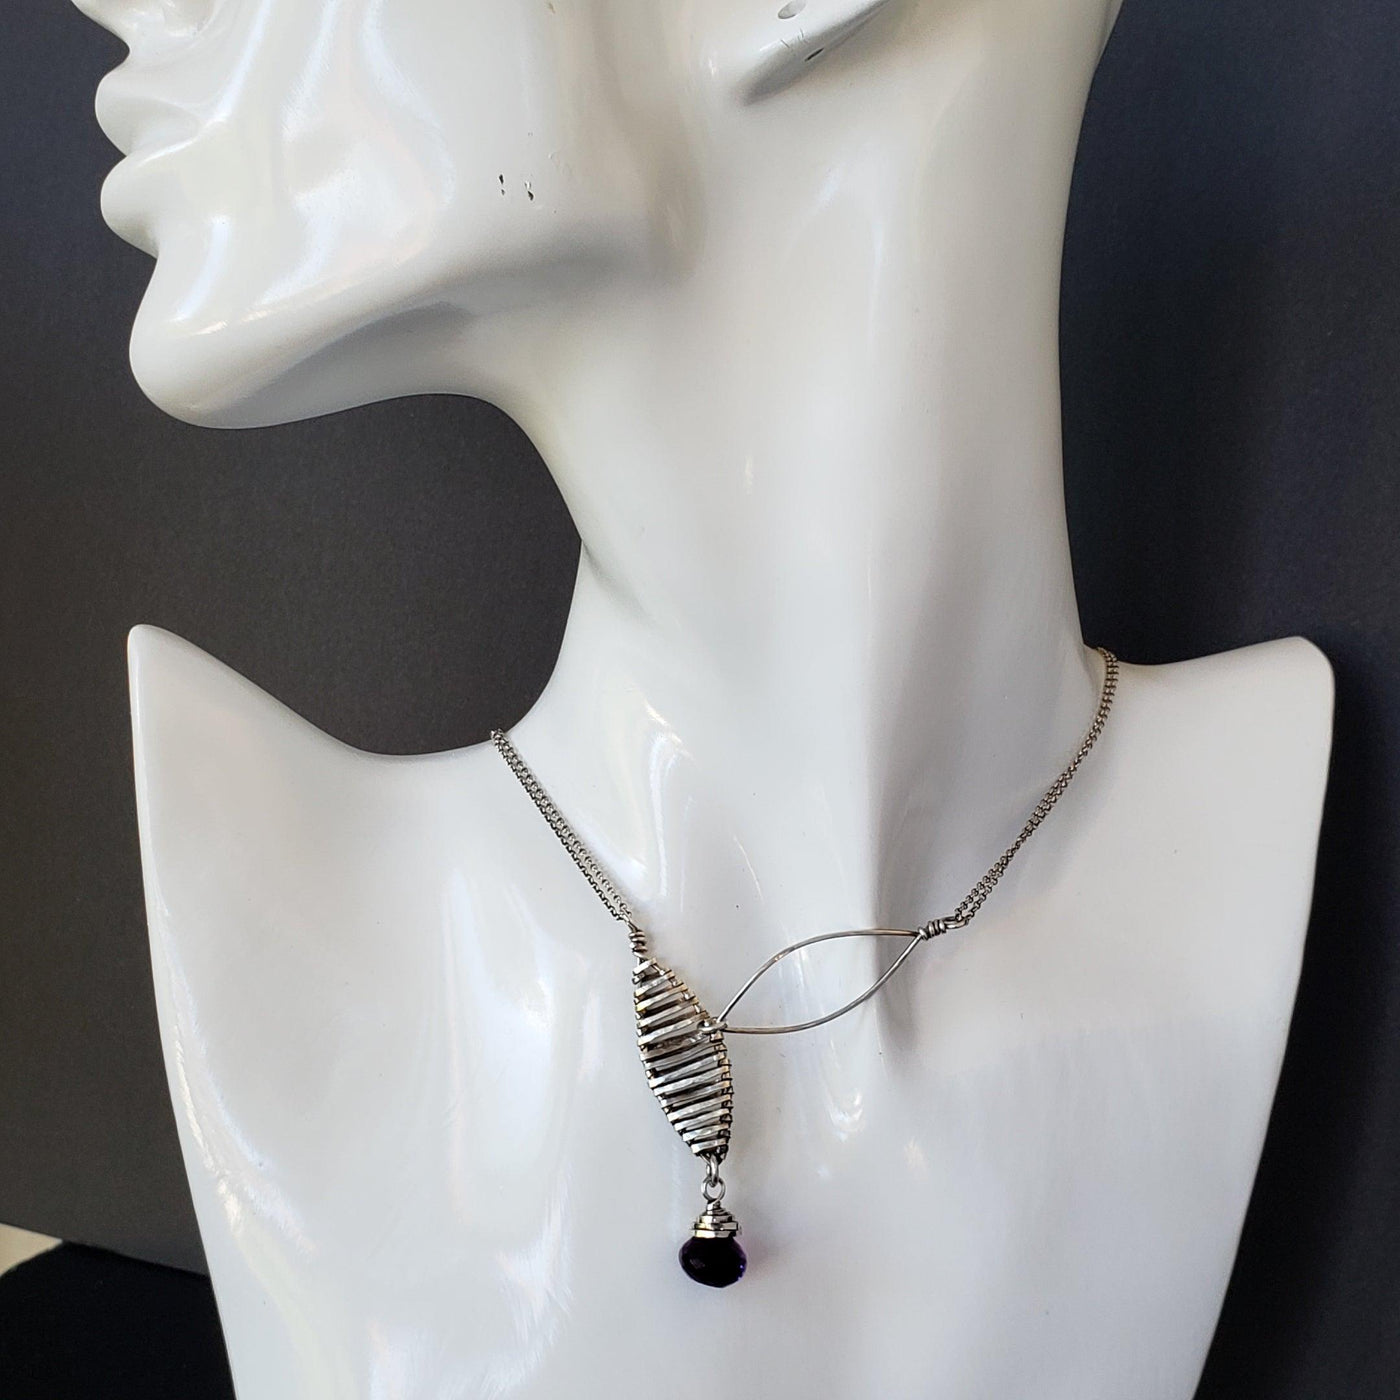 Amethyst pendant necklace